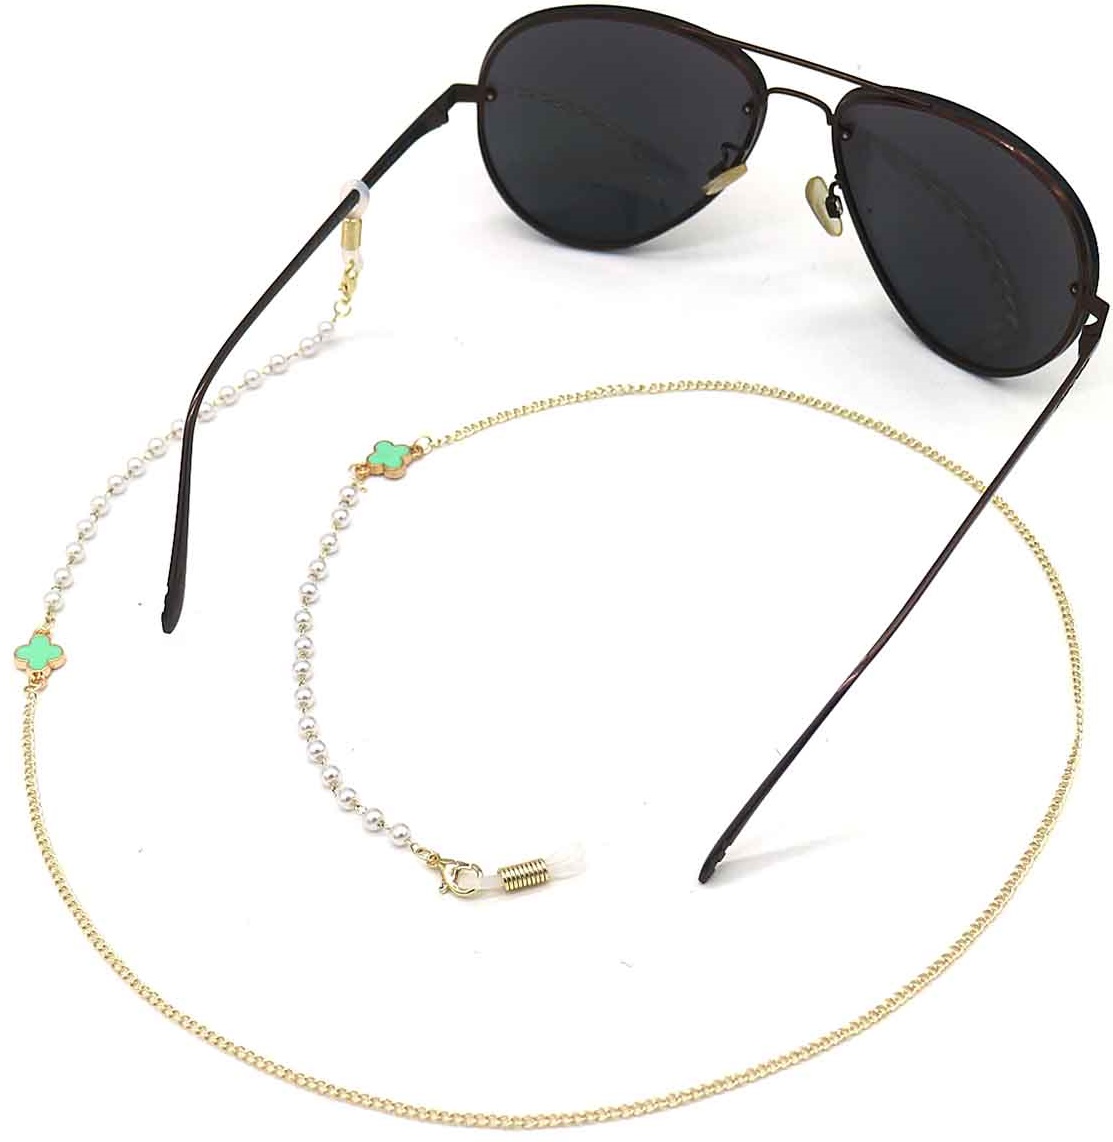 A-E22.2 GL004-054-1 Sunglass Chain Pearls Clover Green